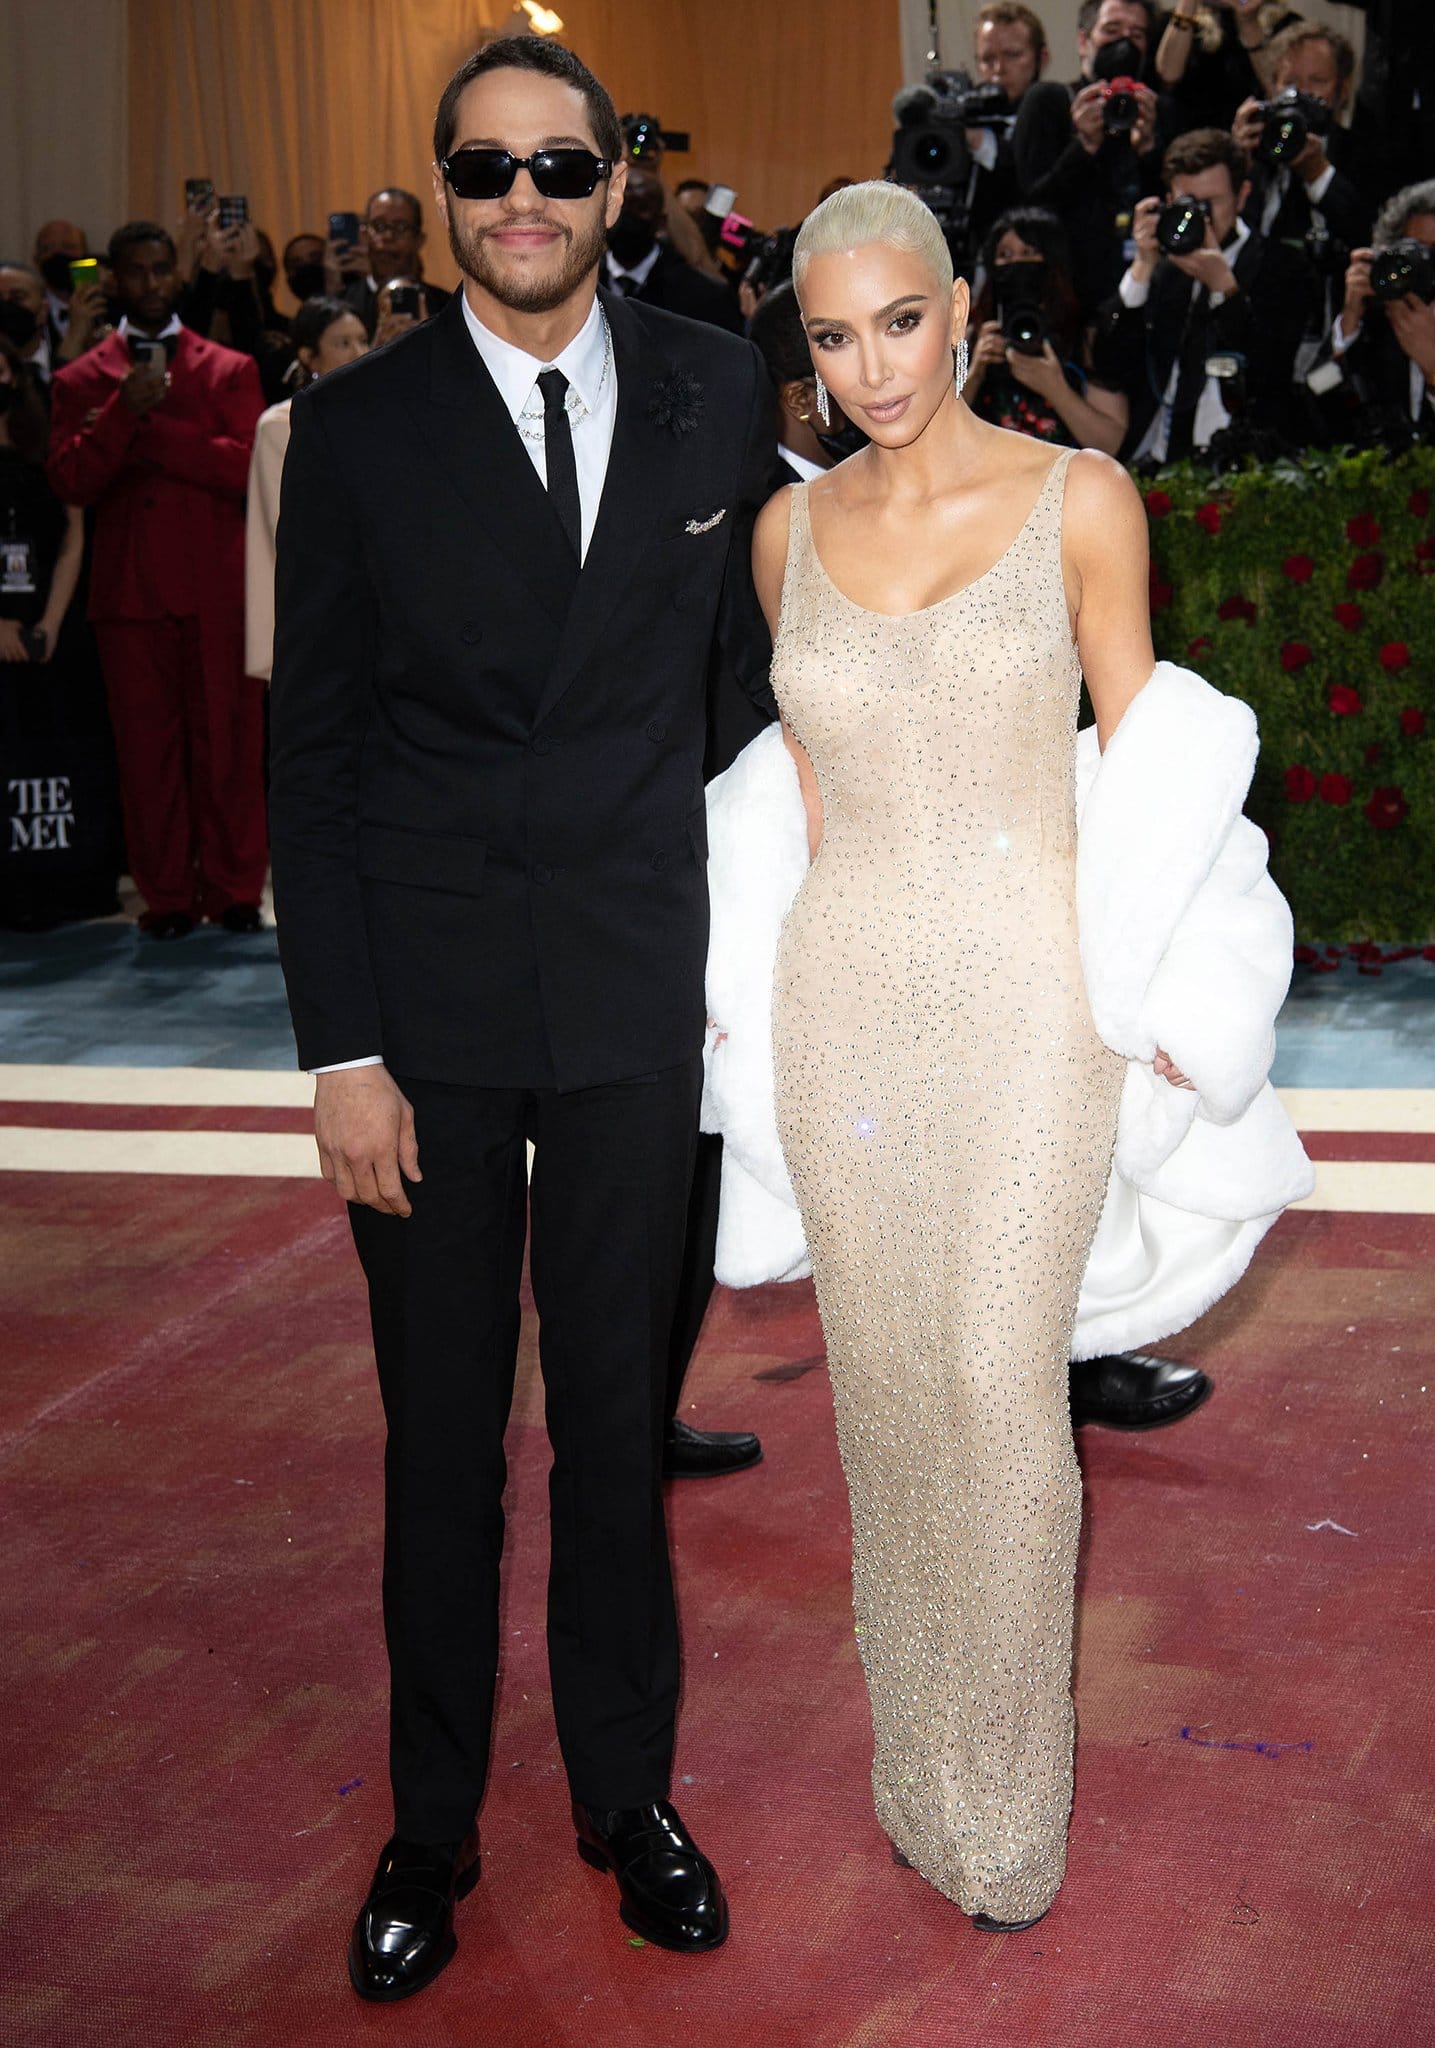 Kim Kardashian wearing the controversial Marilyn Monroe dress at the 2022 Met Gala with then-boyfriend Pete Davidson